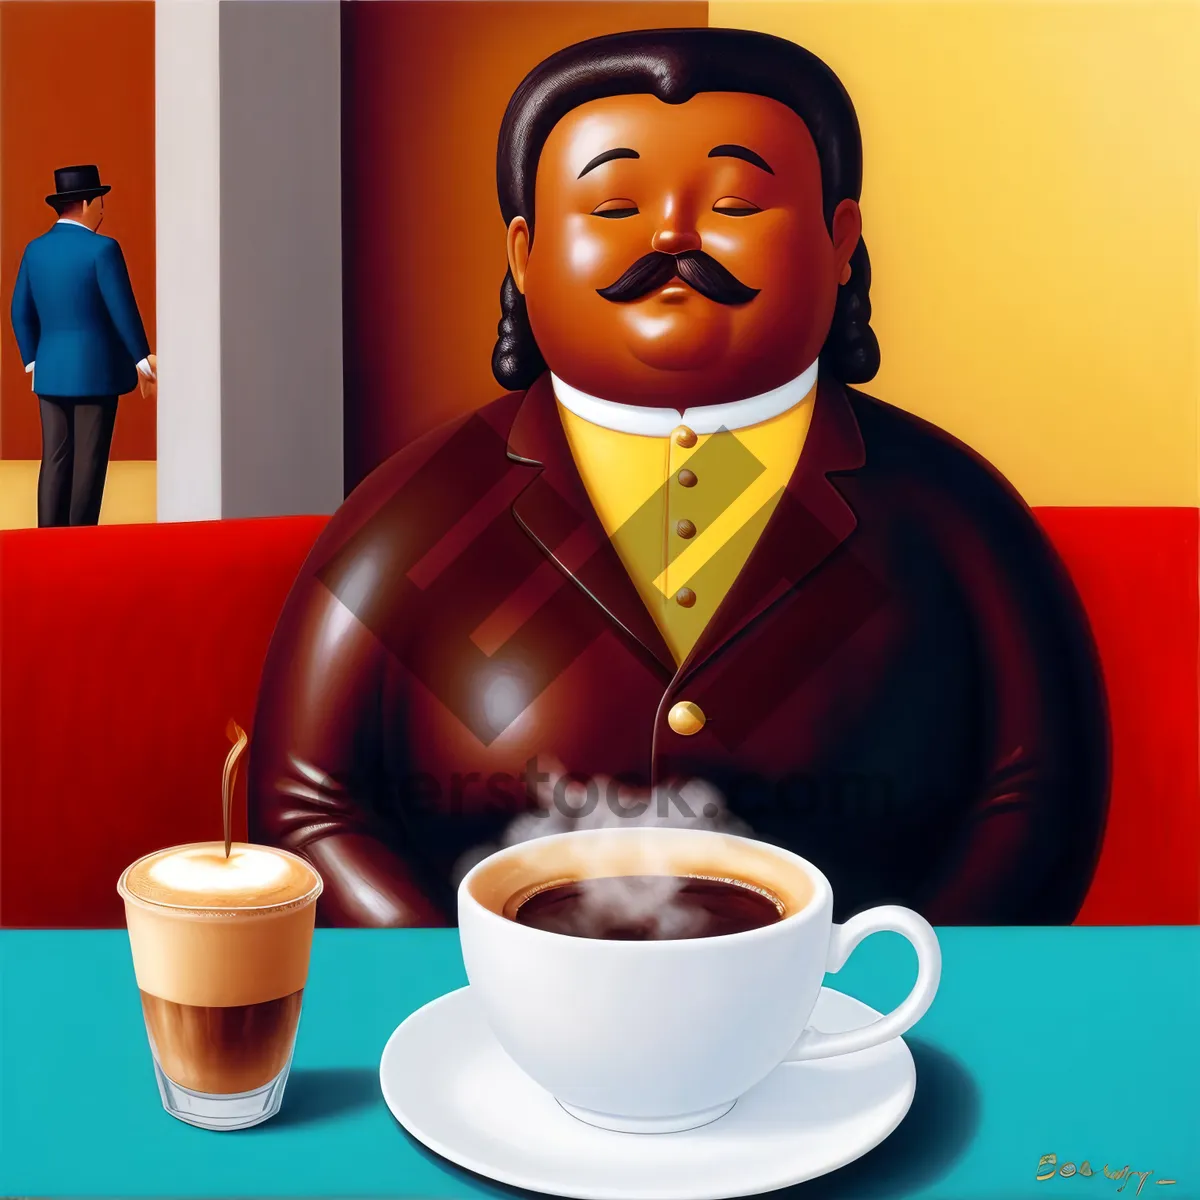 Picture of Caffeine Kick: Aromatic Coffee in a Mug